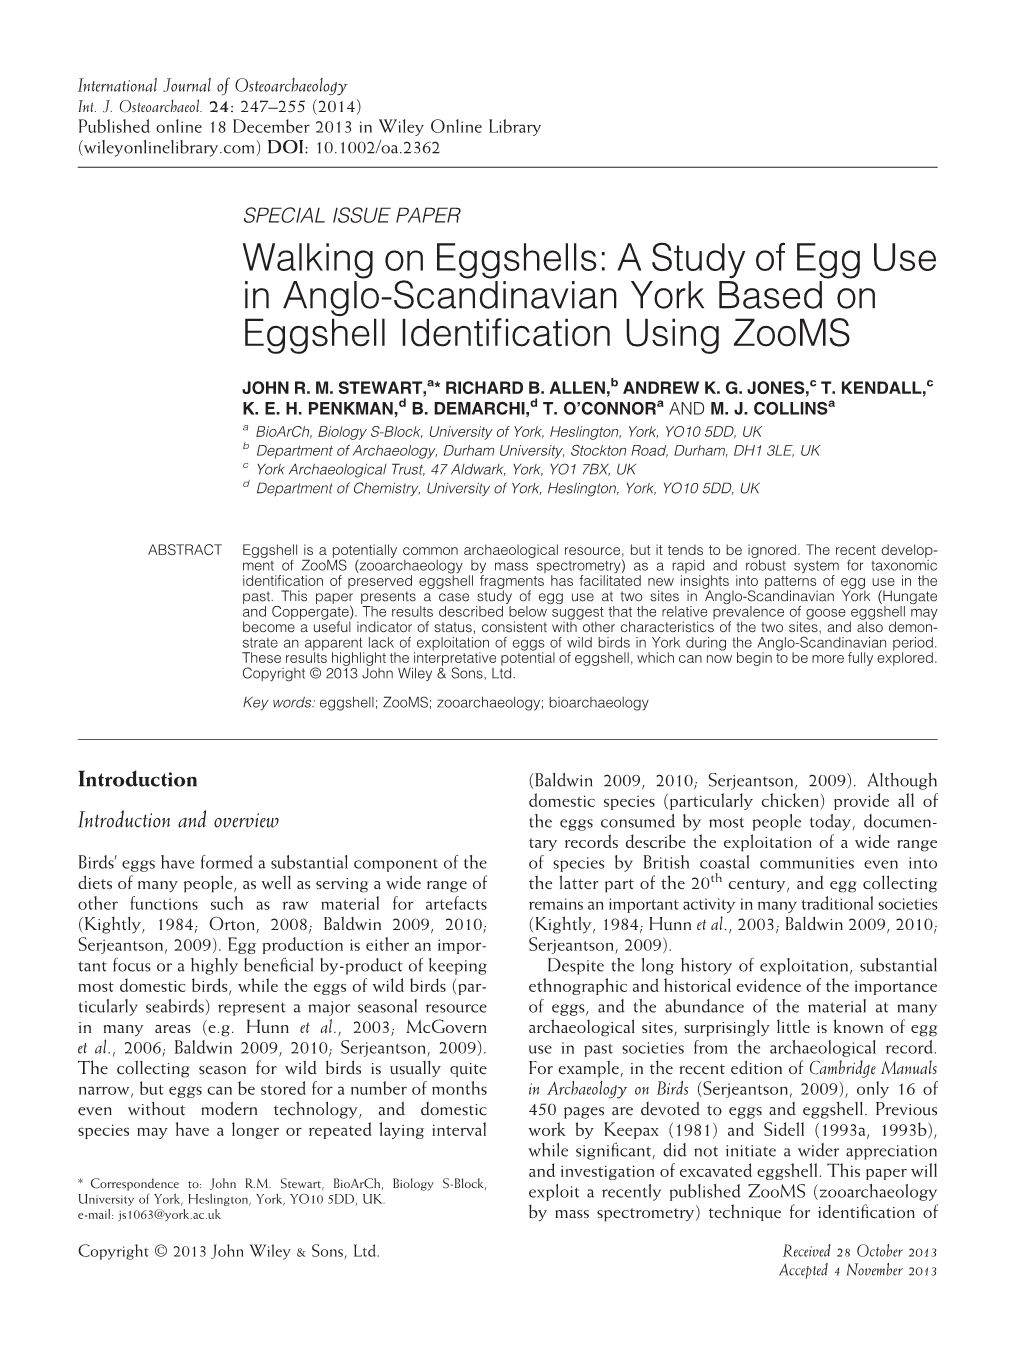 Walking on Eggshells: a Study of Egg Use in Angloscandinavian York